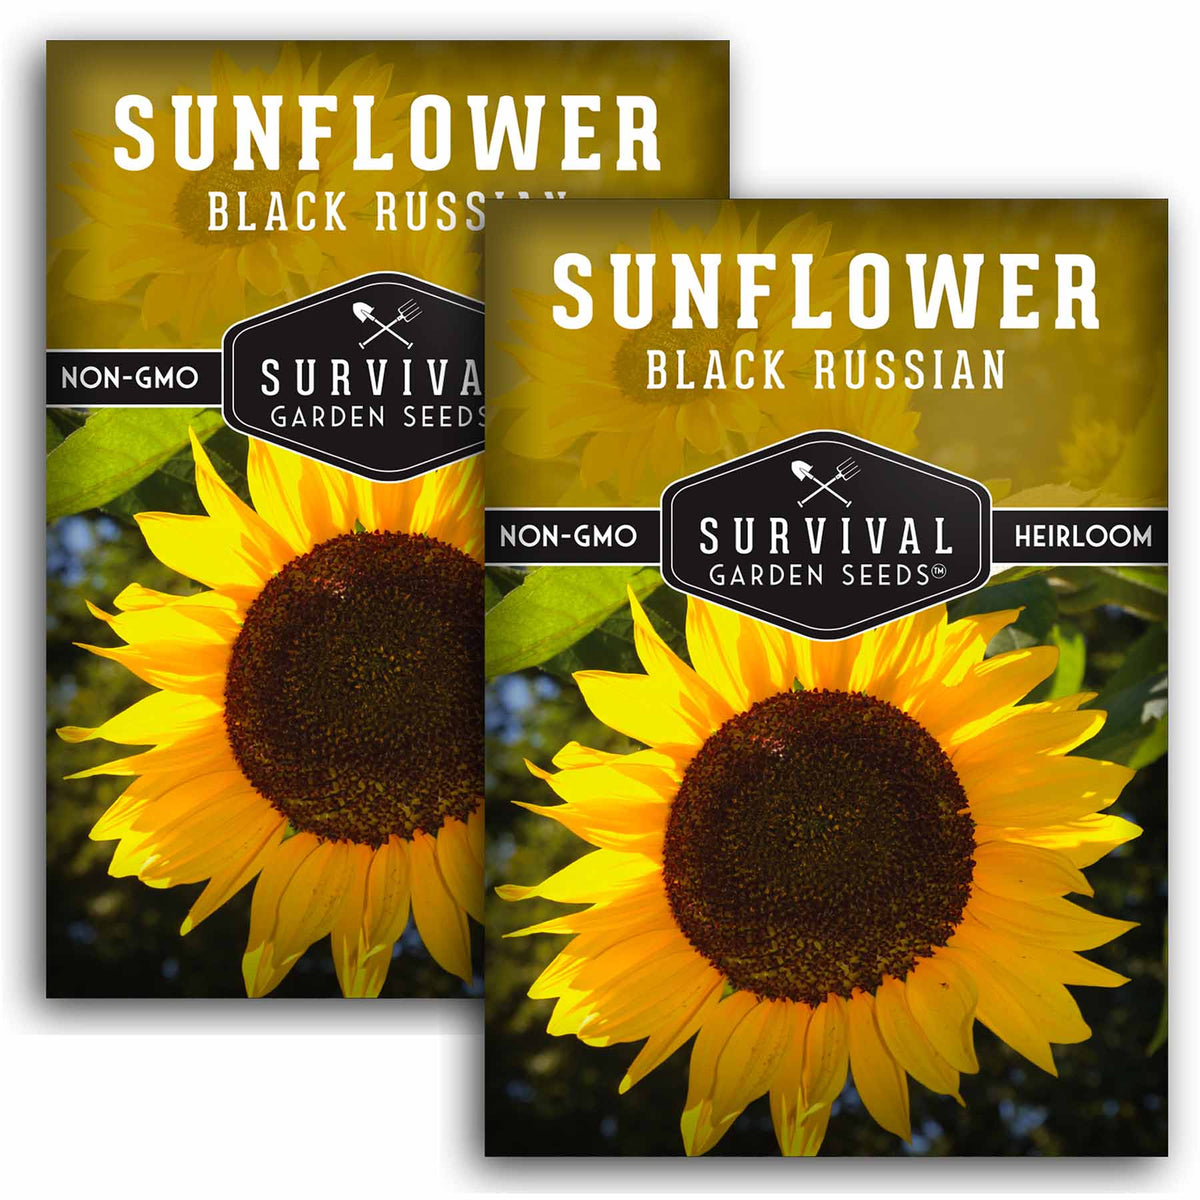 2 packets of Black Russian Sunflower seeds